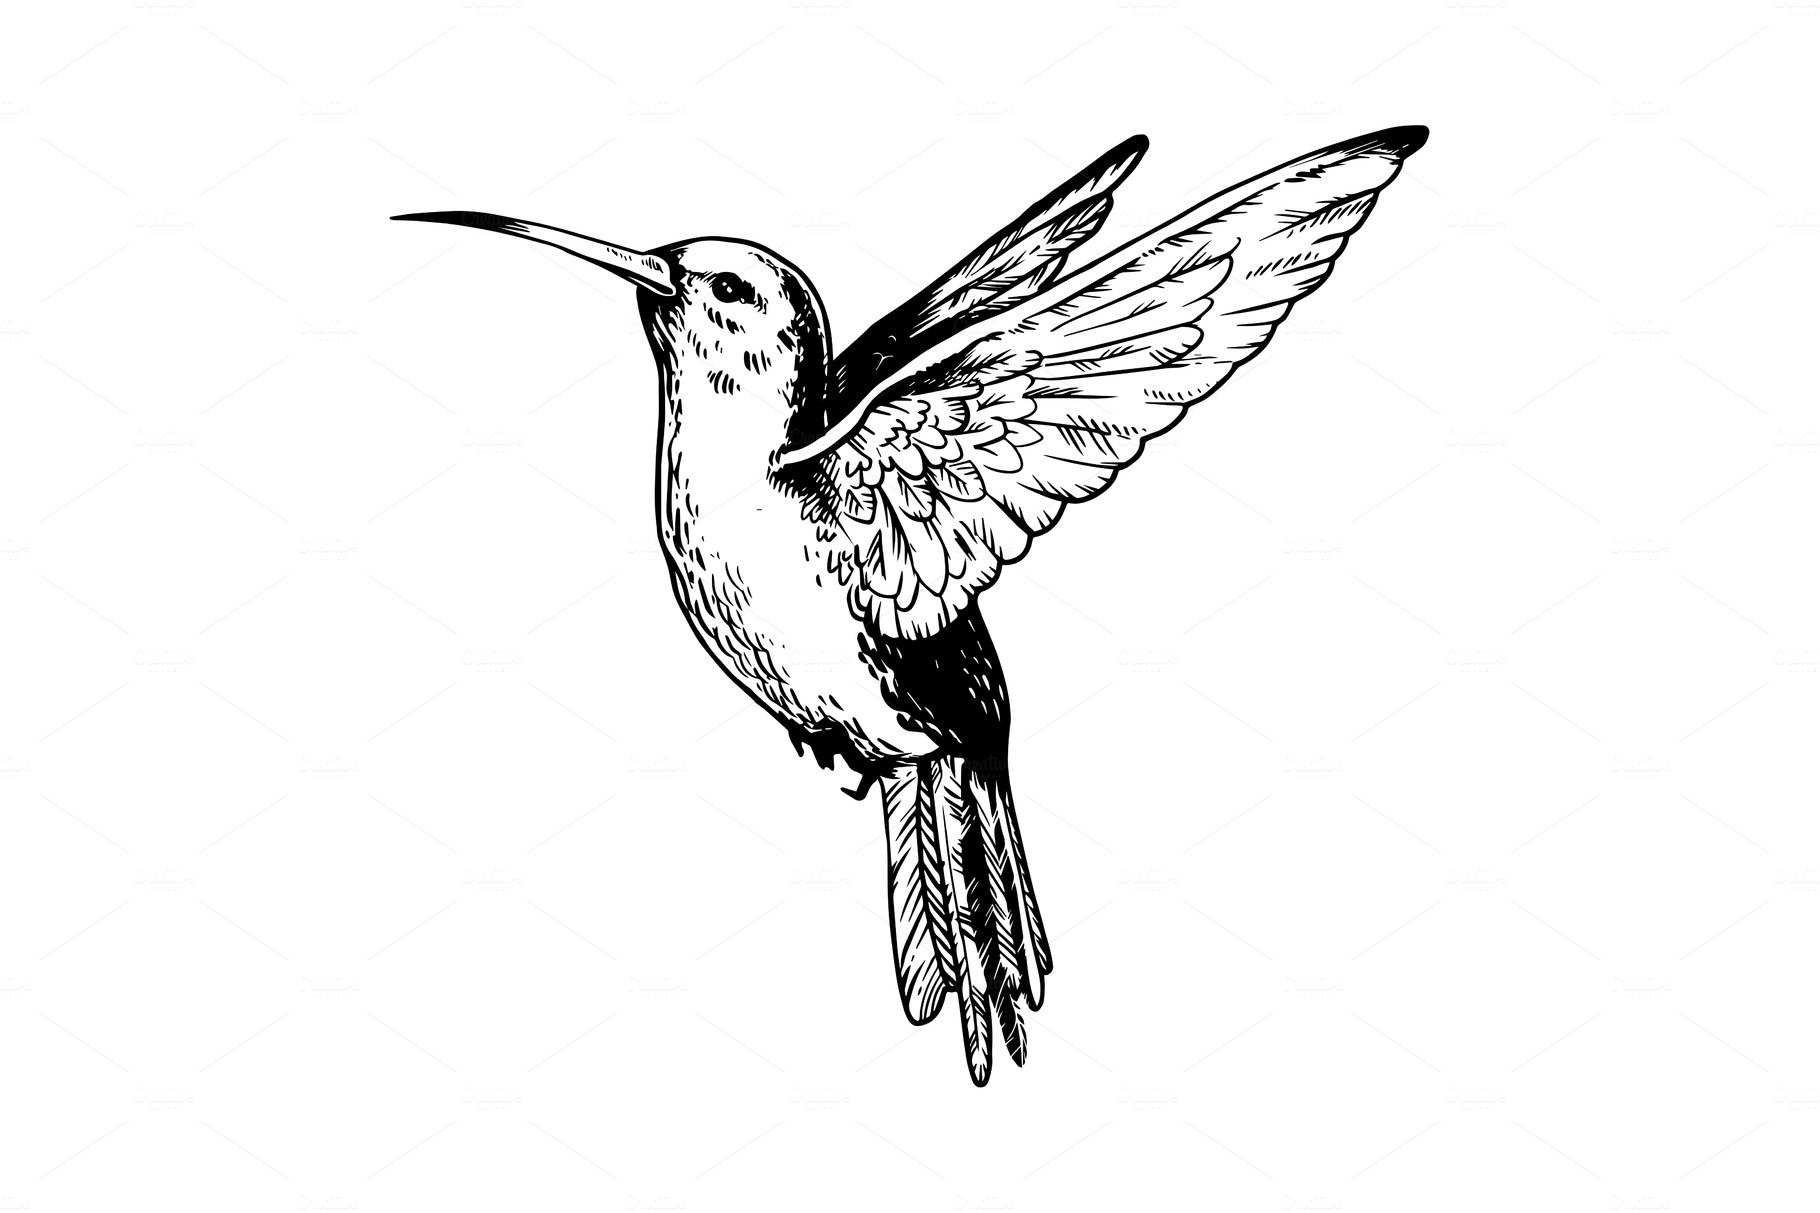 Humming bird engraving vector illustration cover image.